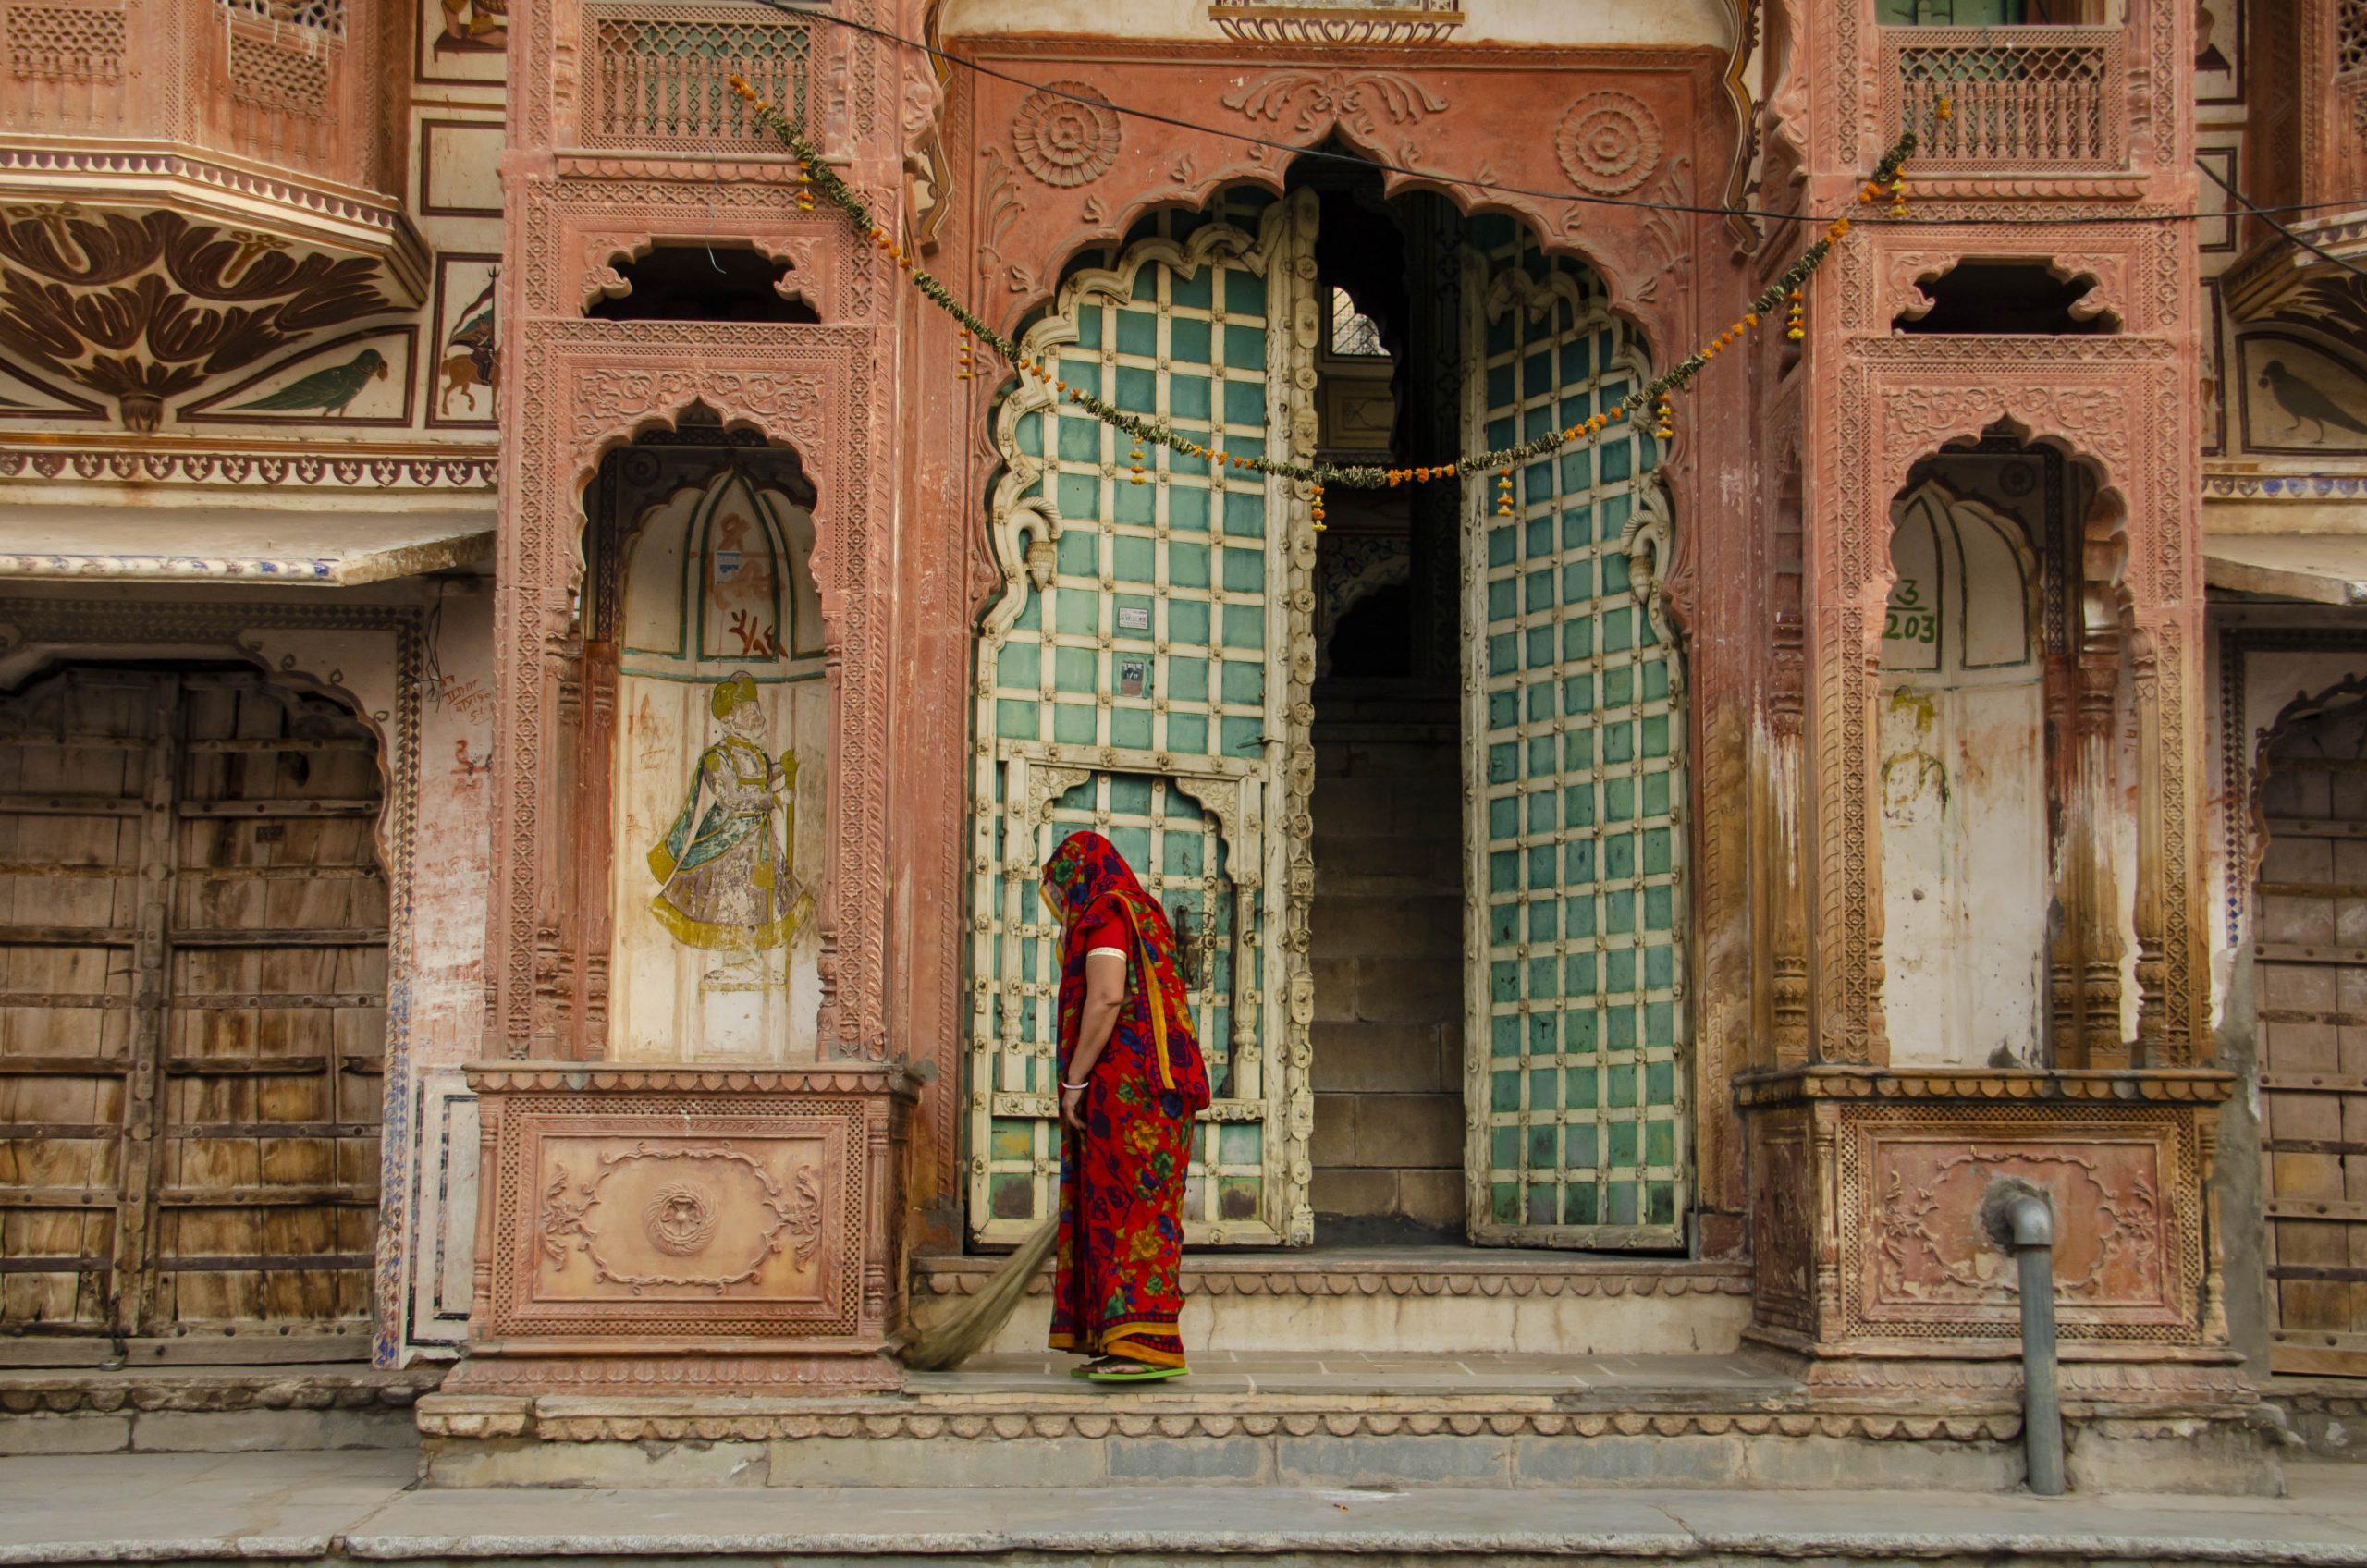 A woman sweeping a temple door